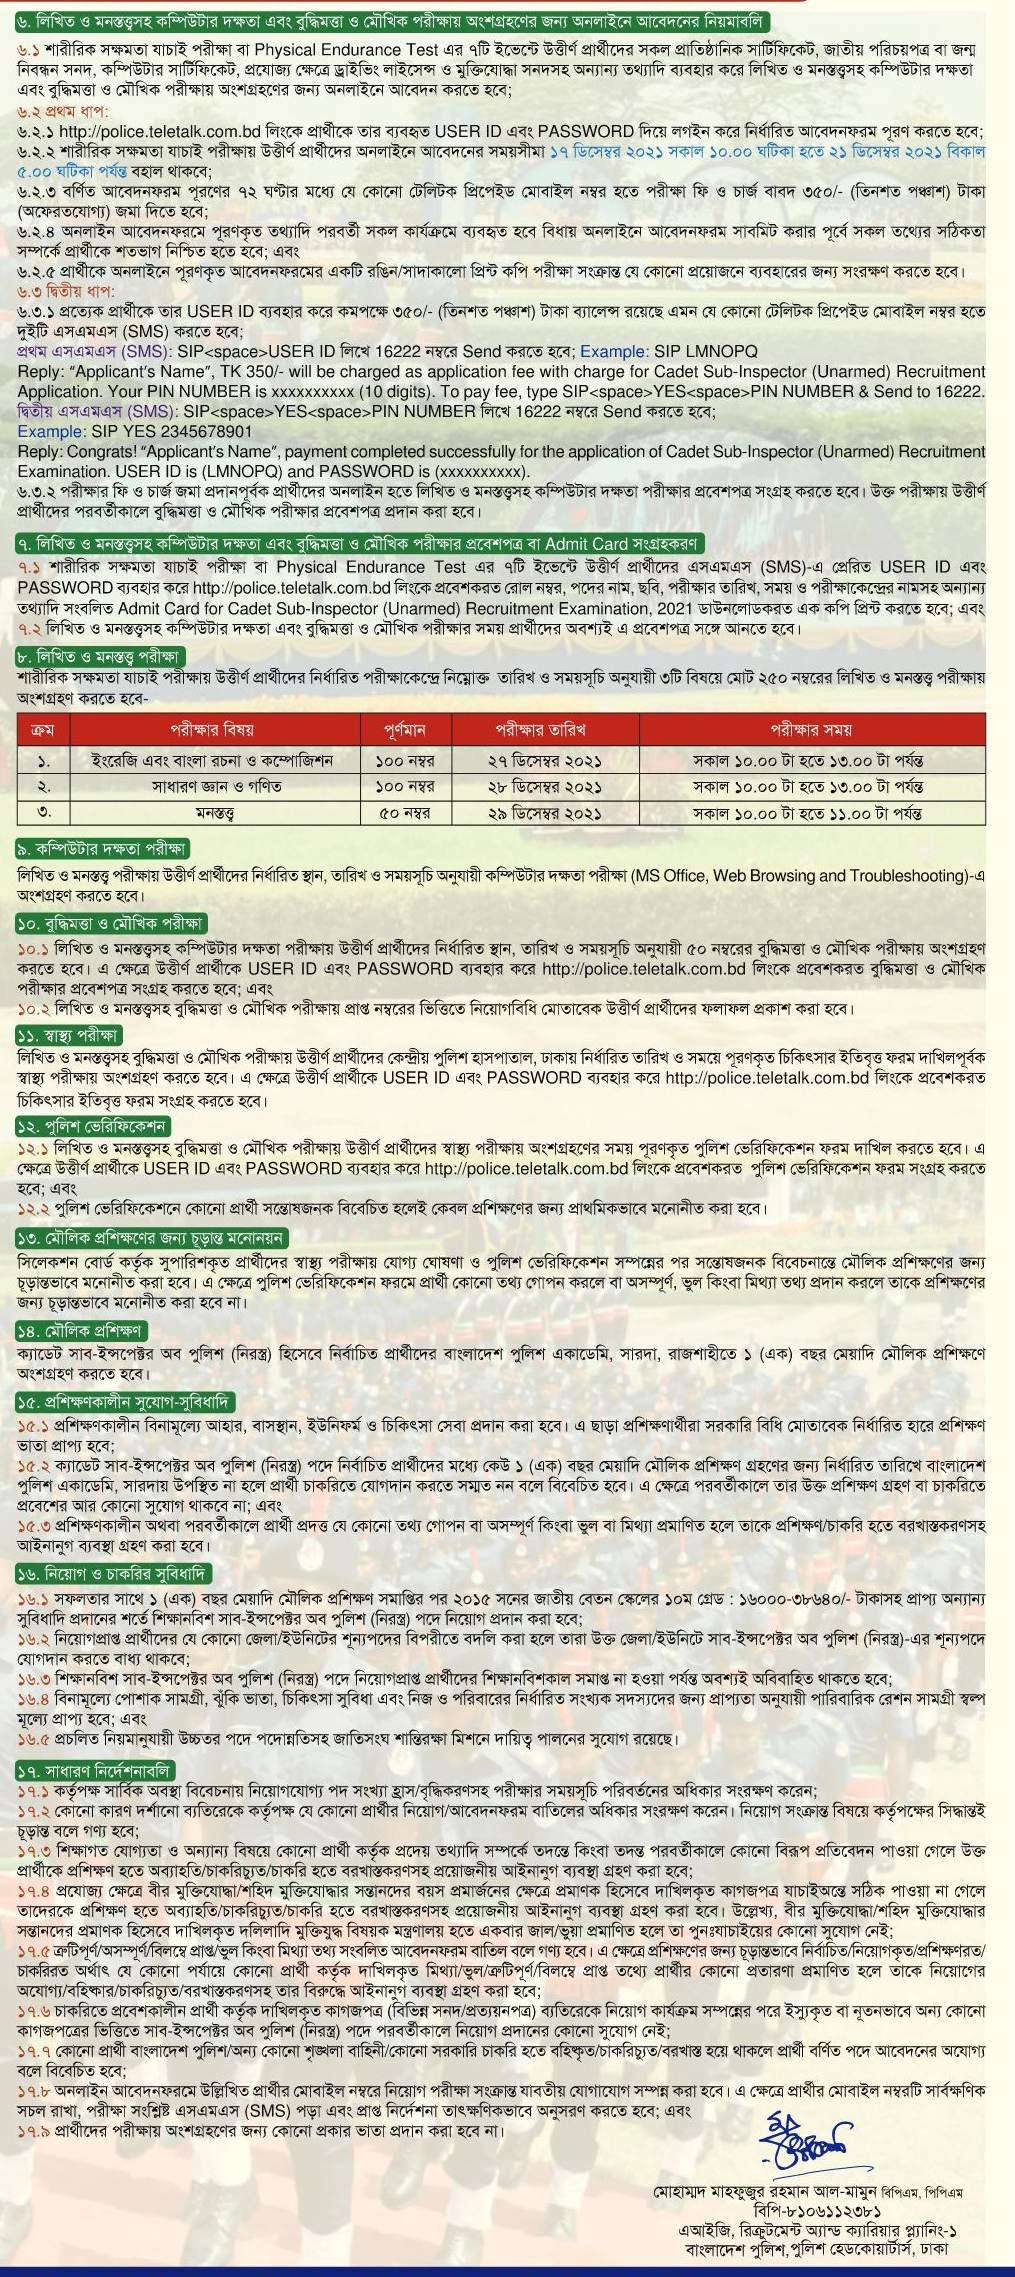 Bangladesh Police SI Circular 2022 Image & PDF Download